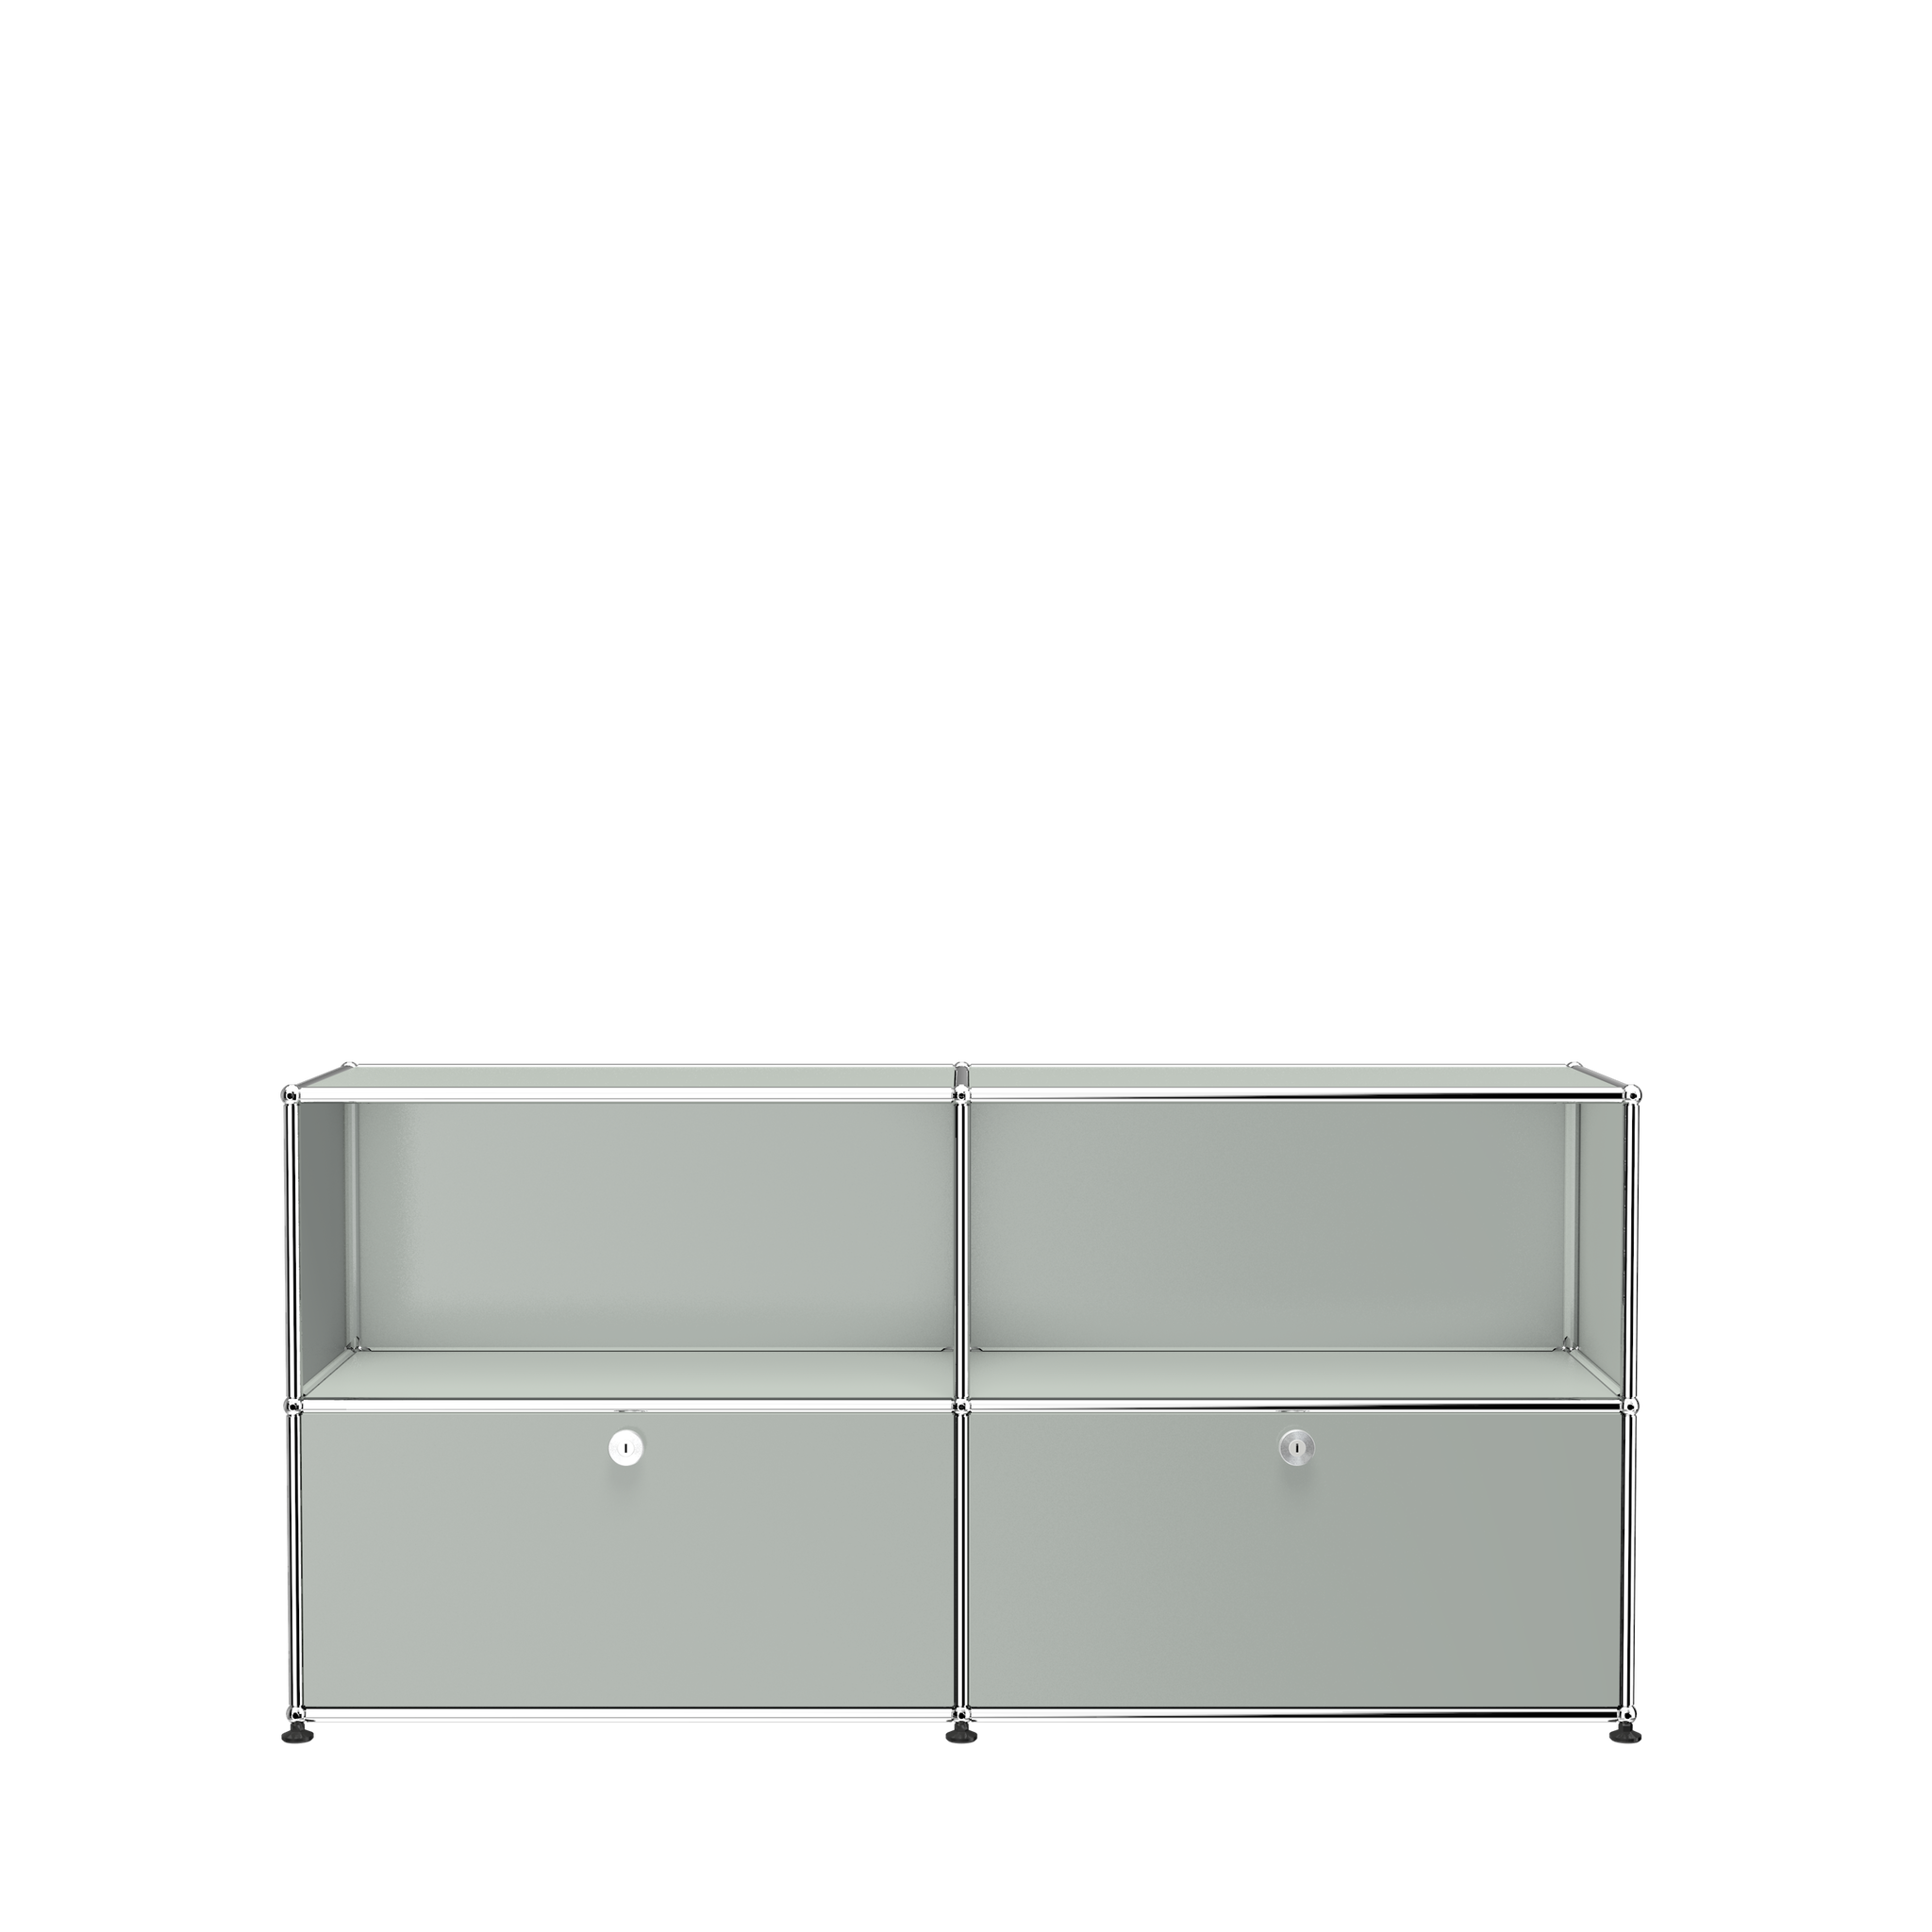 USM Haller Steel 2 Door Credenza File Cabinet (C2A )in Light Gray